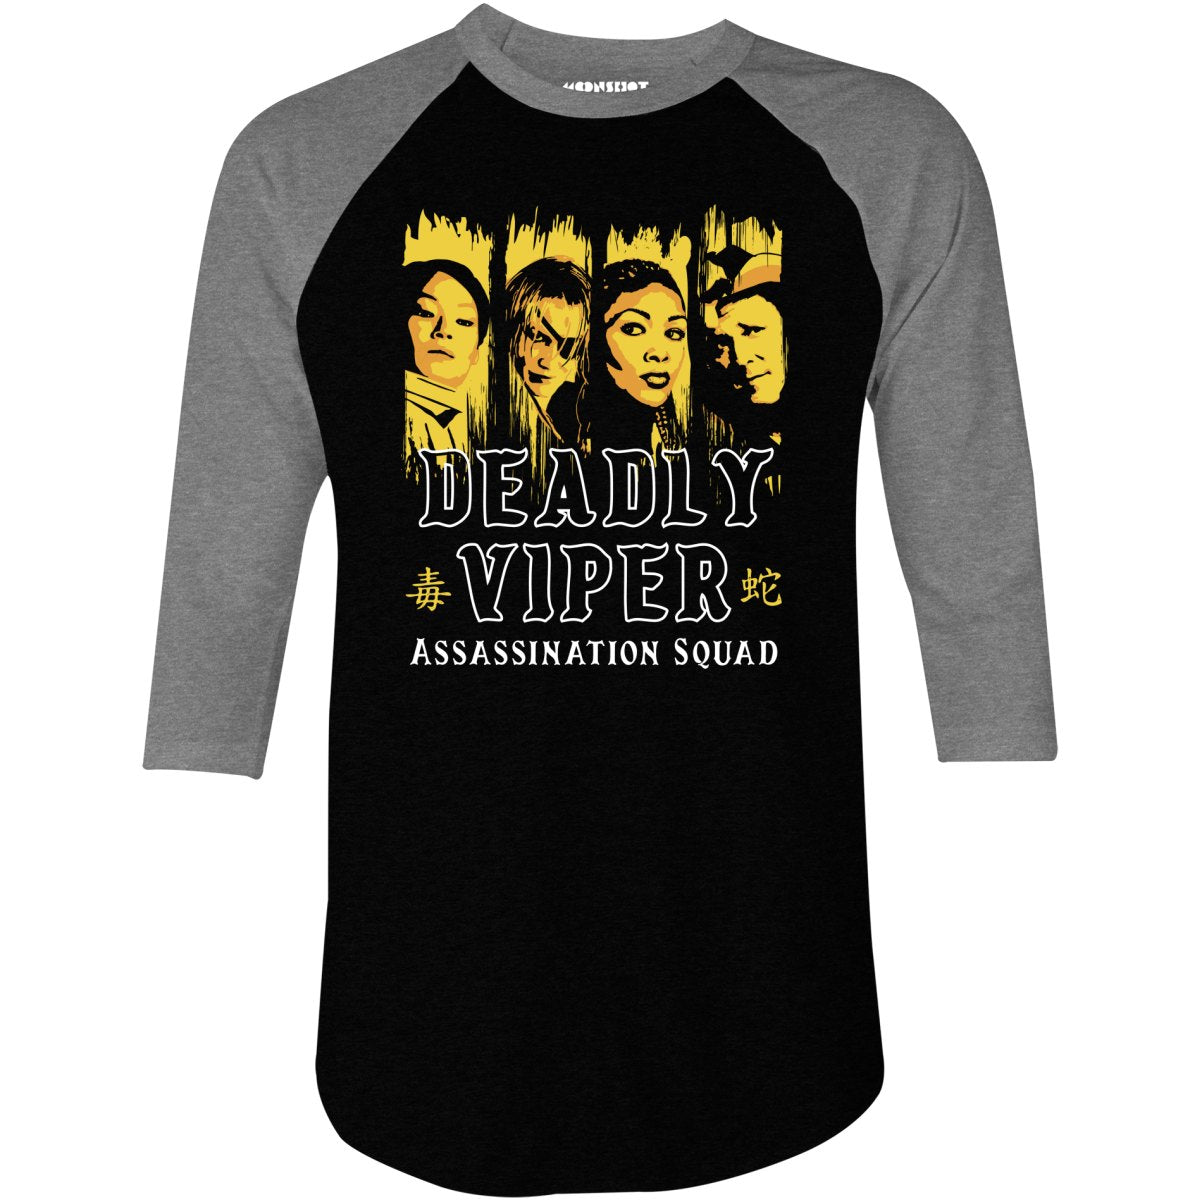 Deadly Viper Assassination Squad - 3/4 Sleeve Raglan T-Shirt